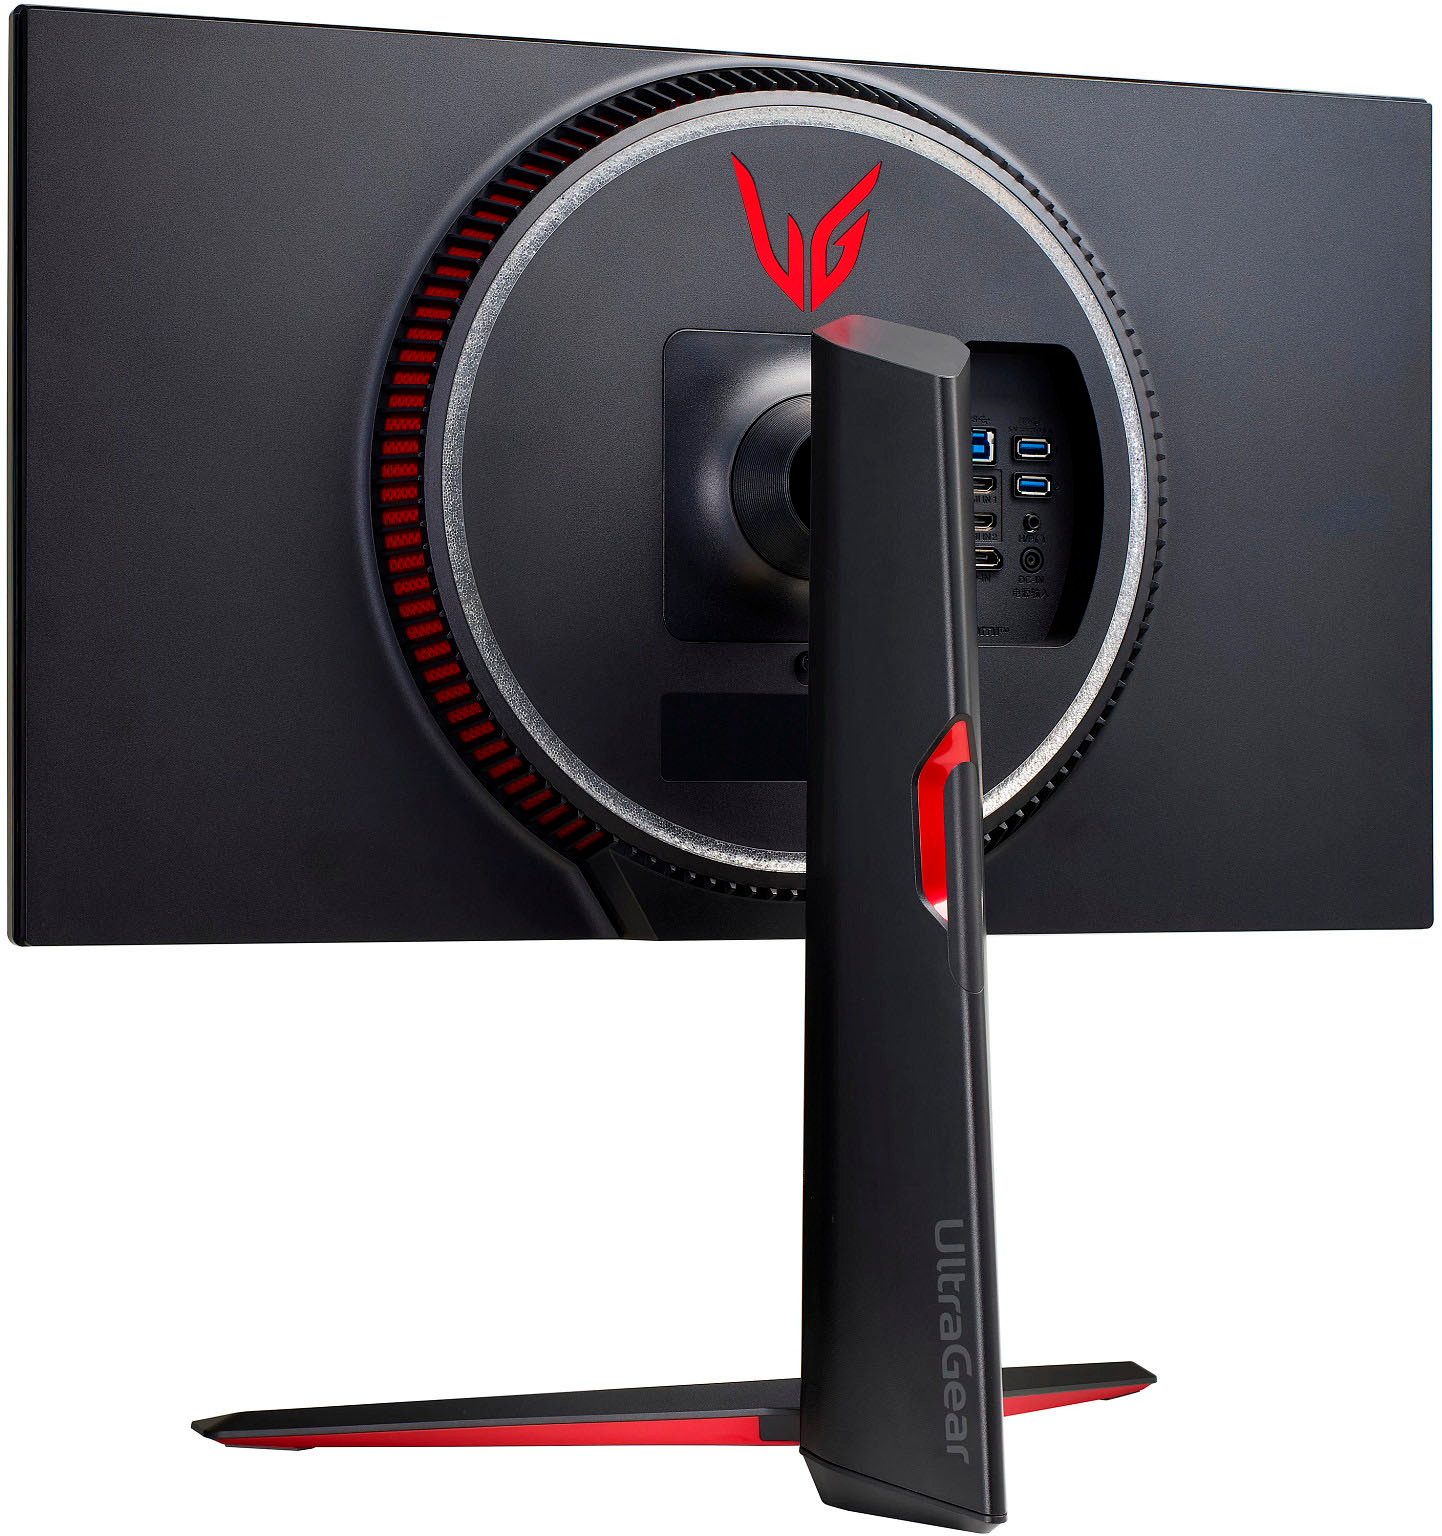 27-inch UltraGear Gaming Monitor - 27GN950-B